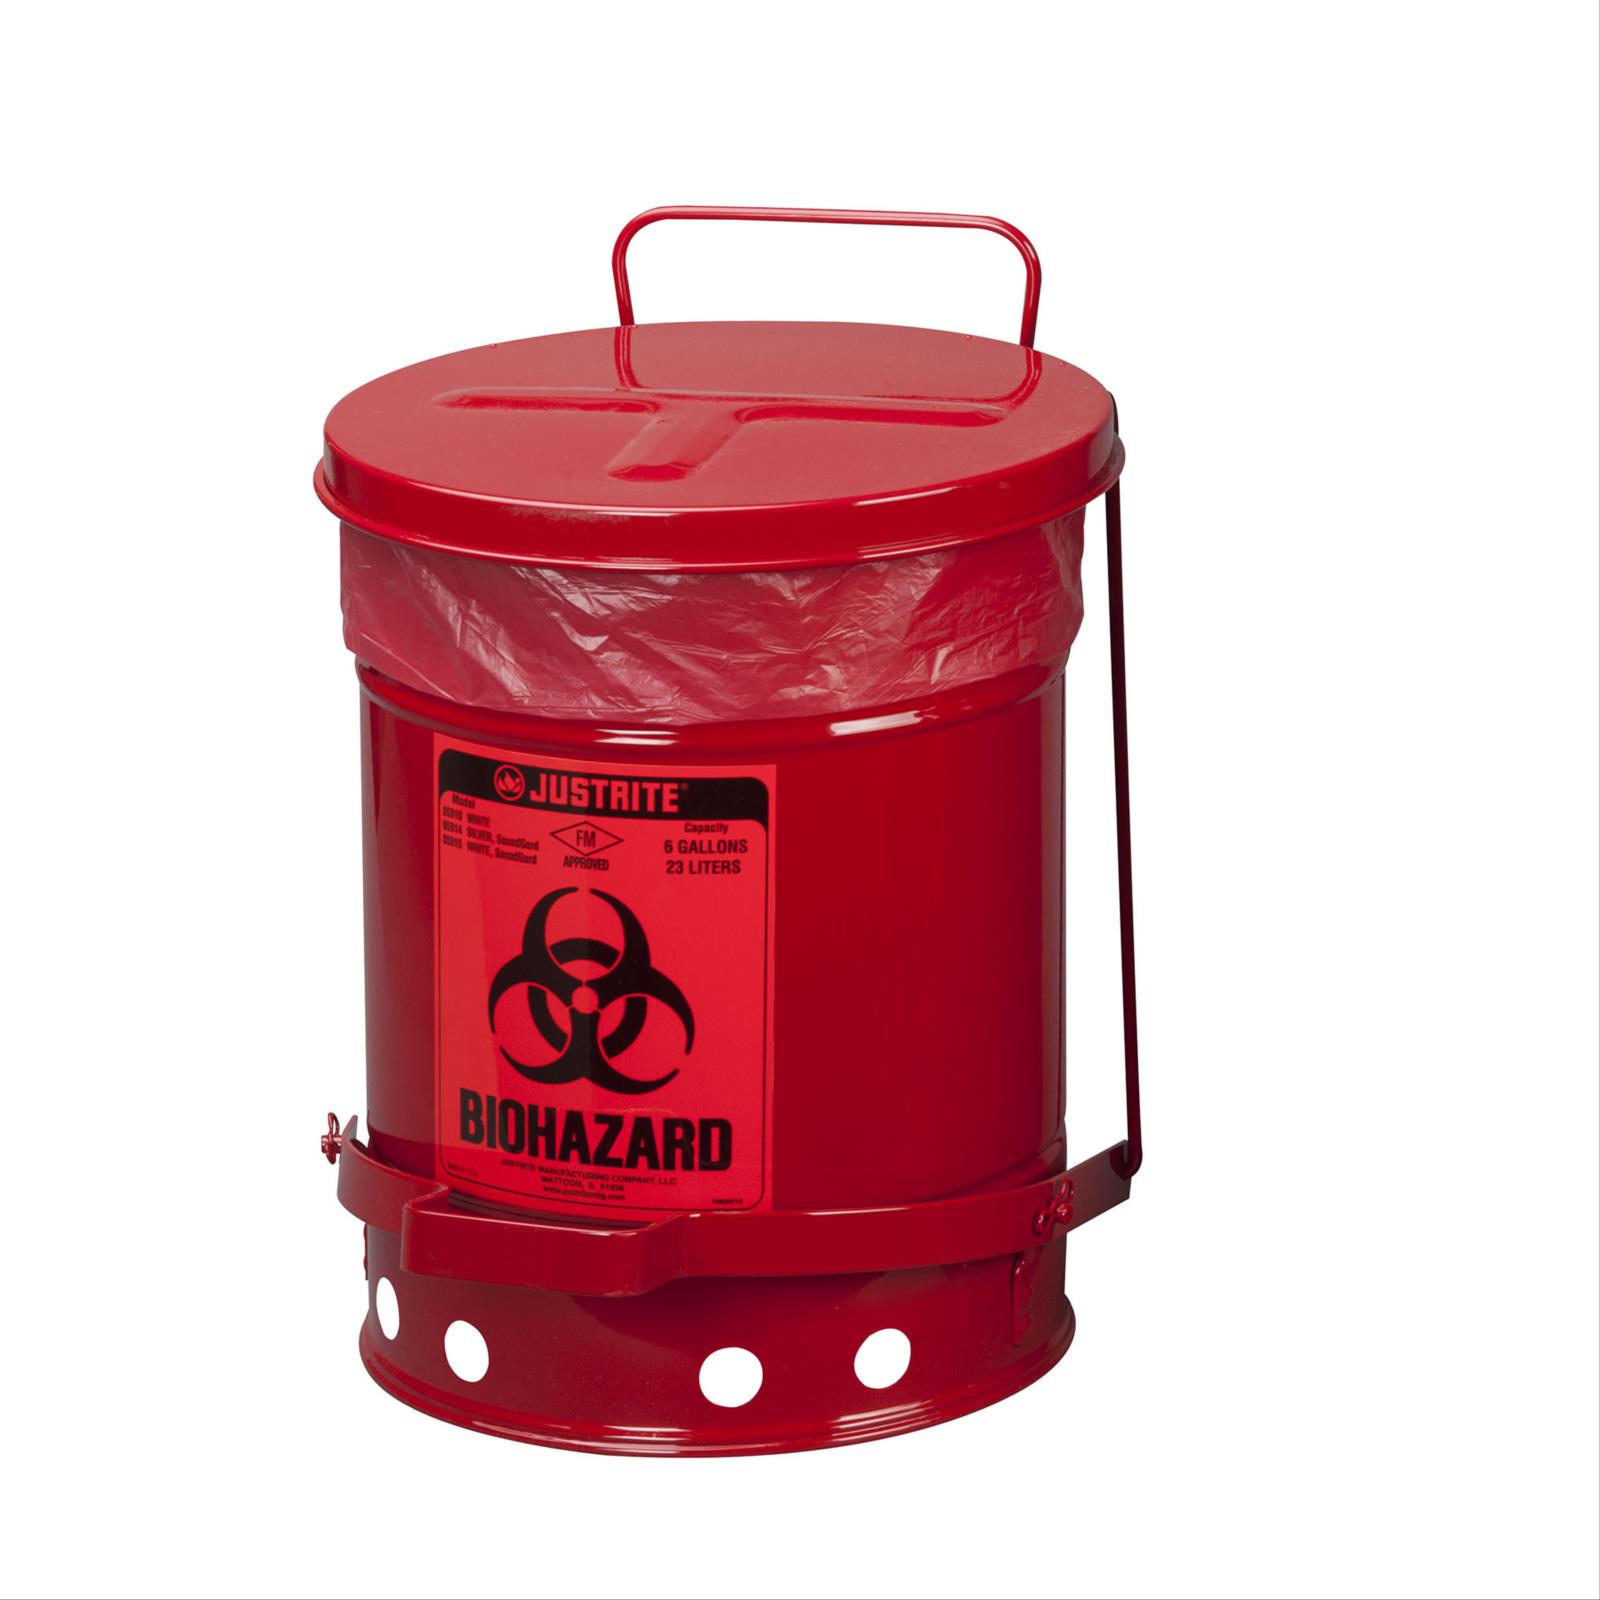 Biohazard Waste Cans, 6 Gallon